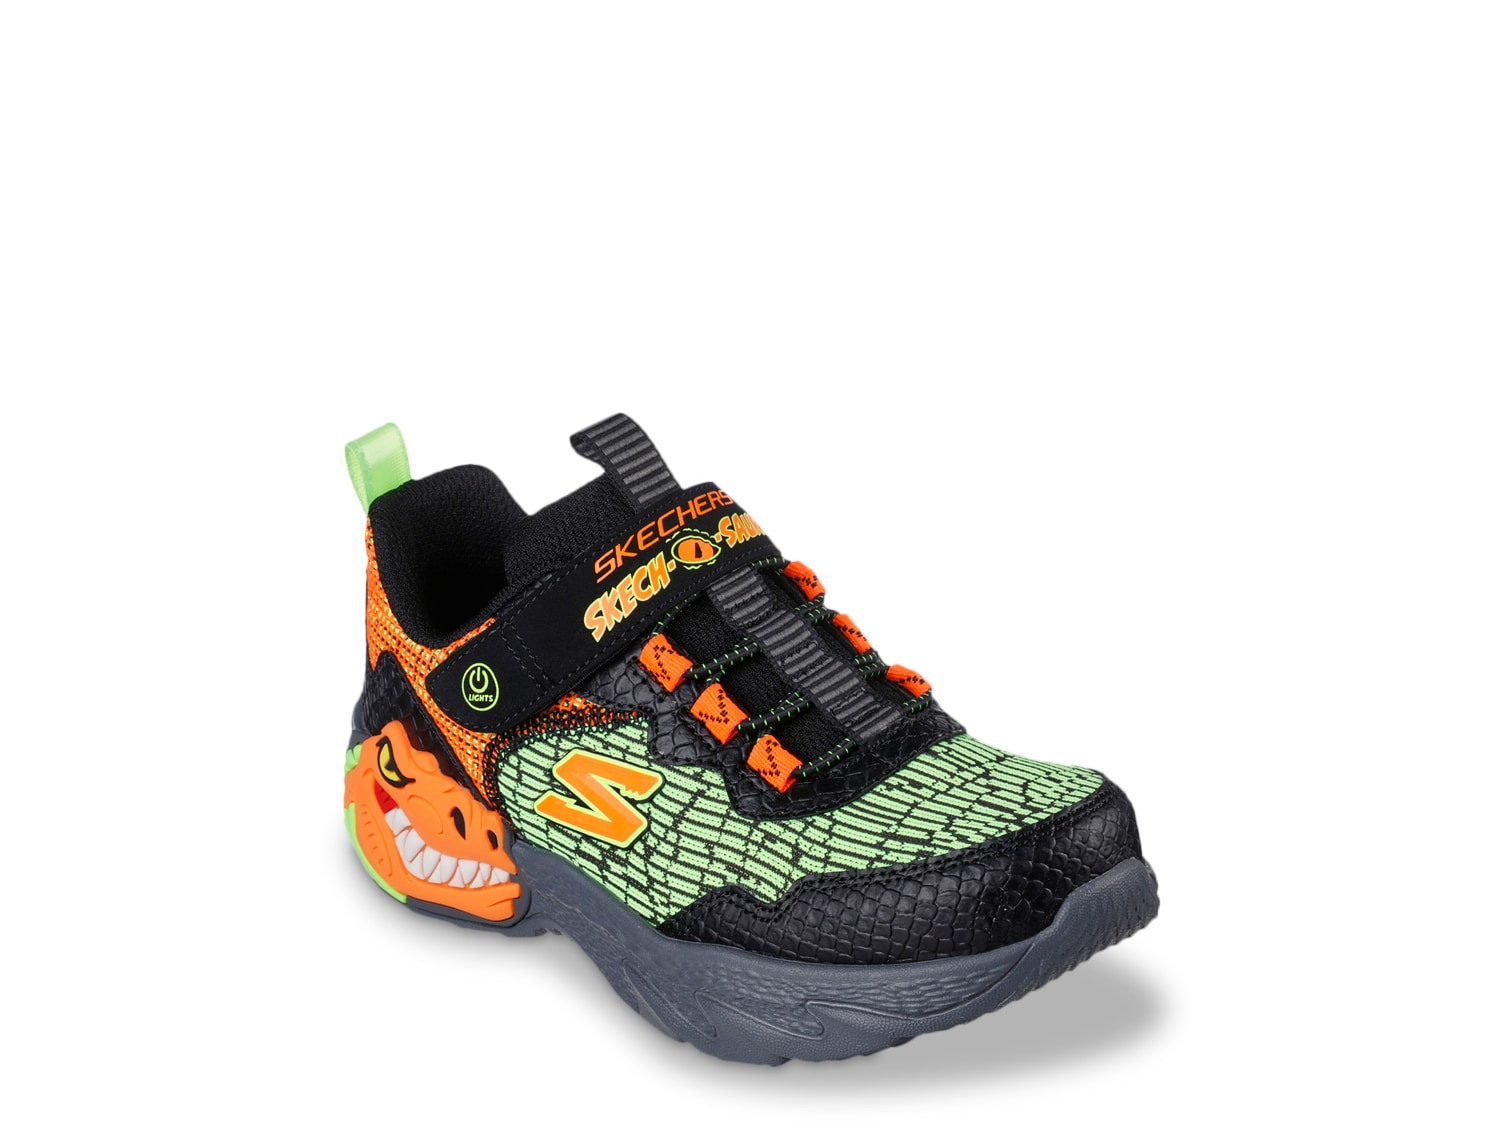 Skechers Skech-O-Saurus Dino-Lights Sneaker - Kids' - Free Shipping | DSW